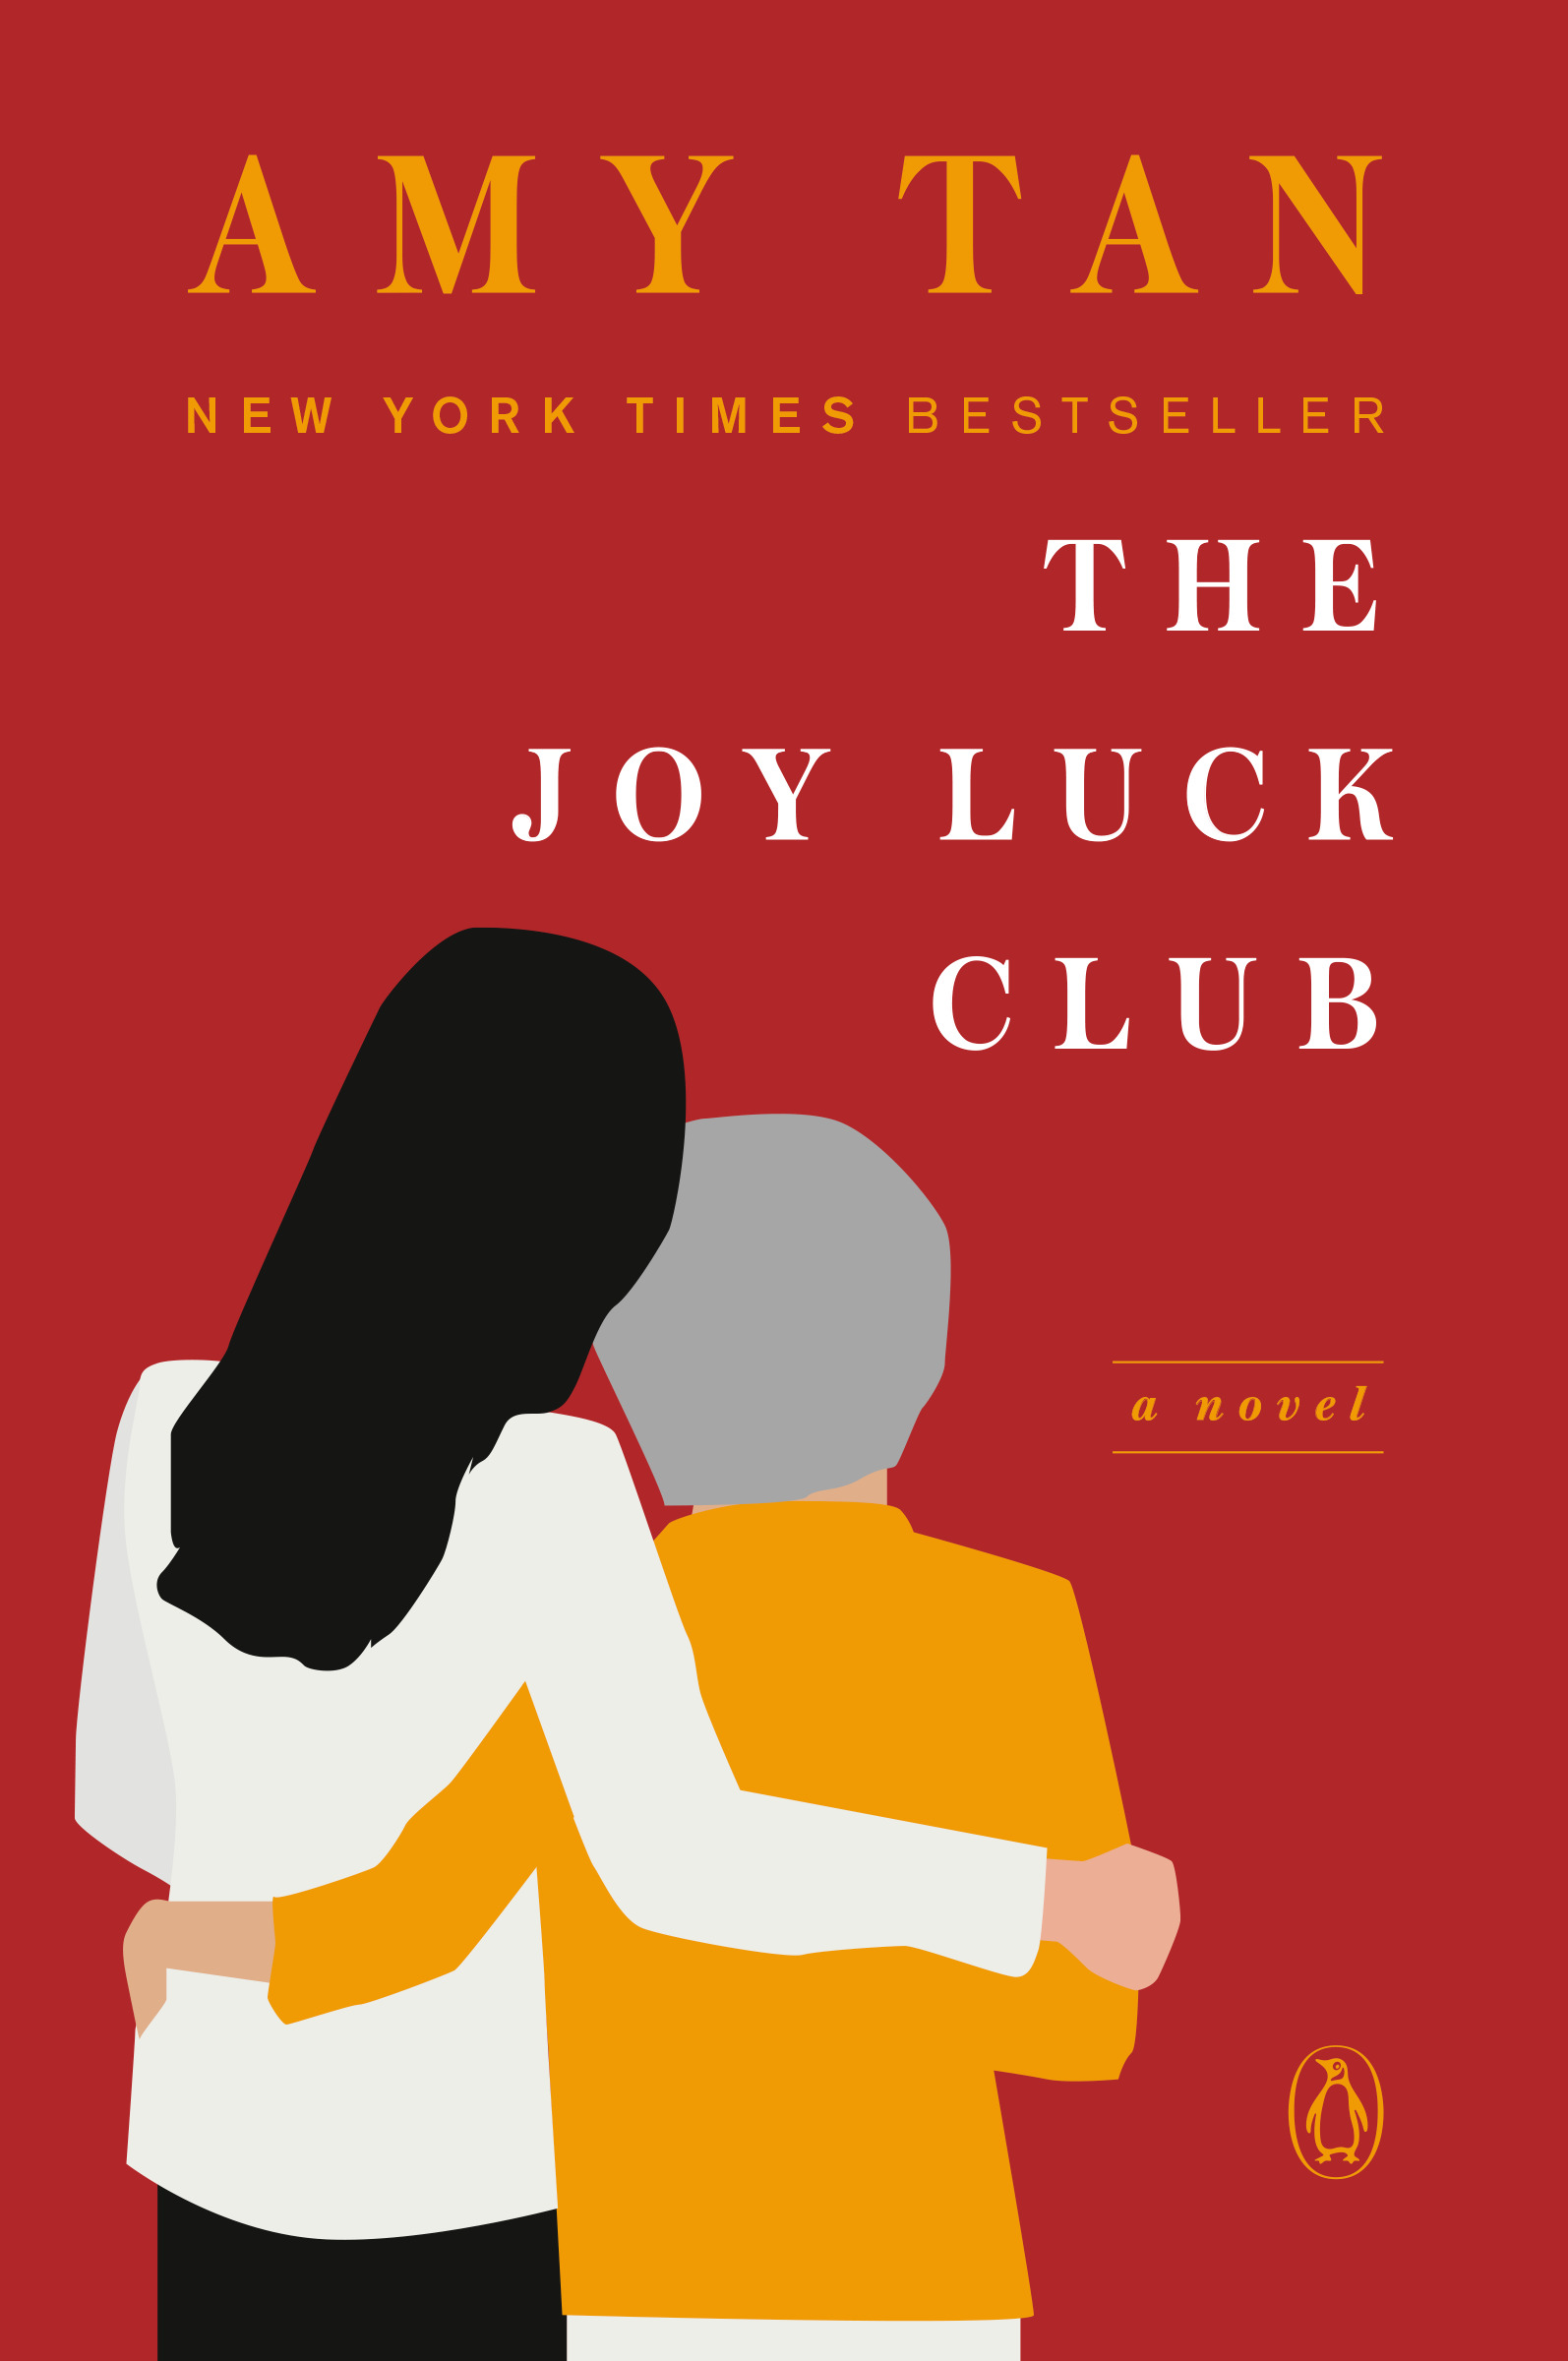 The Joy Luck Club - 10-14.99